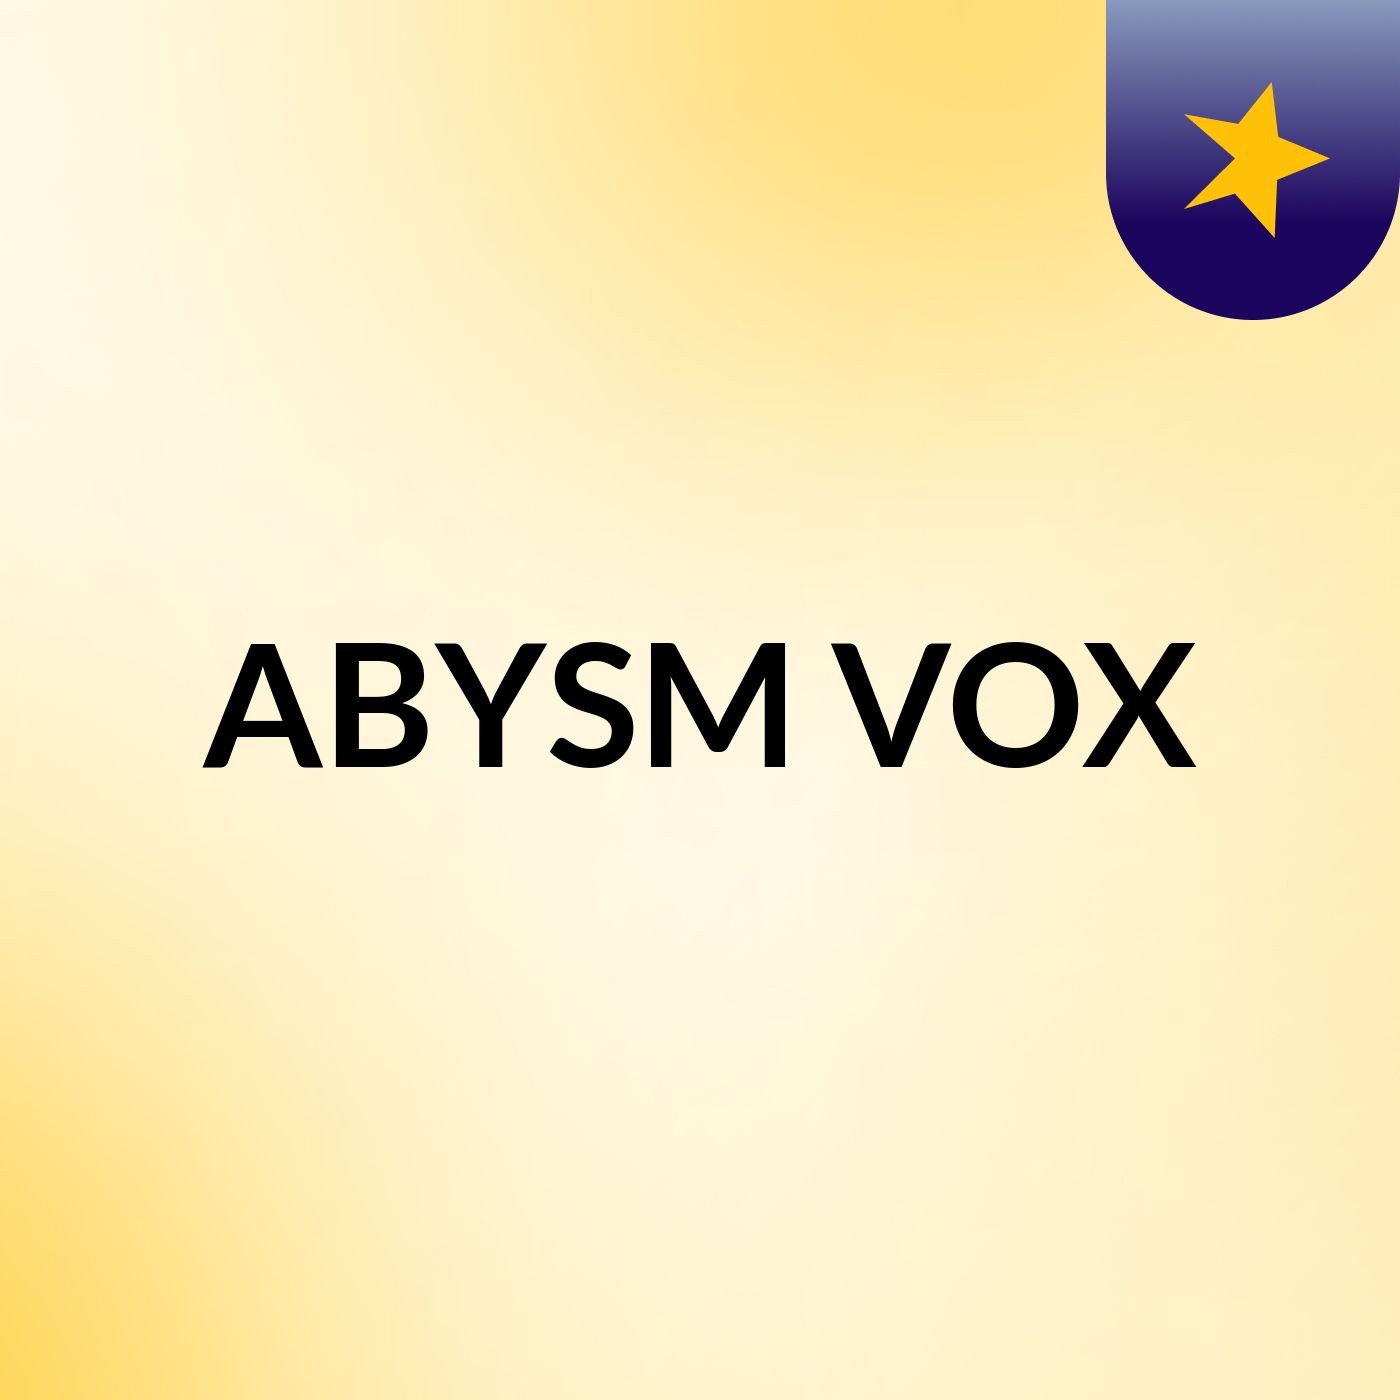 ABYSM VOX